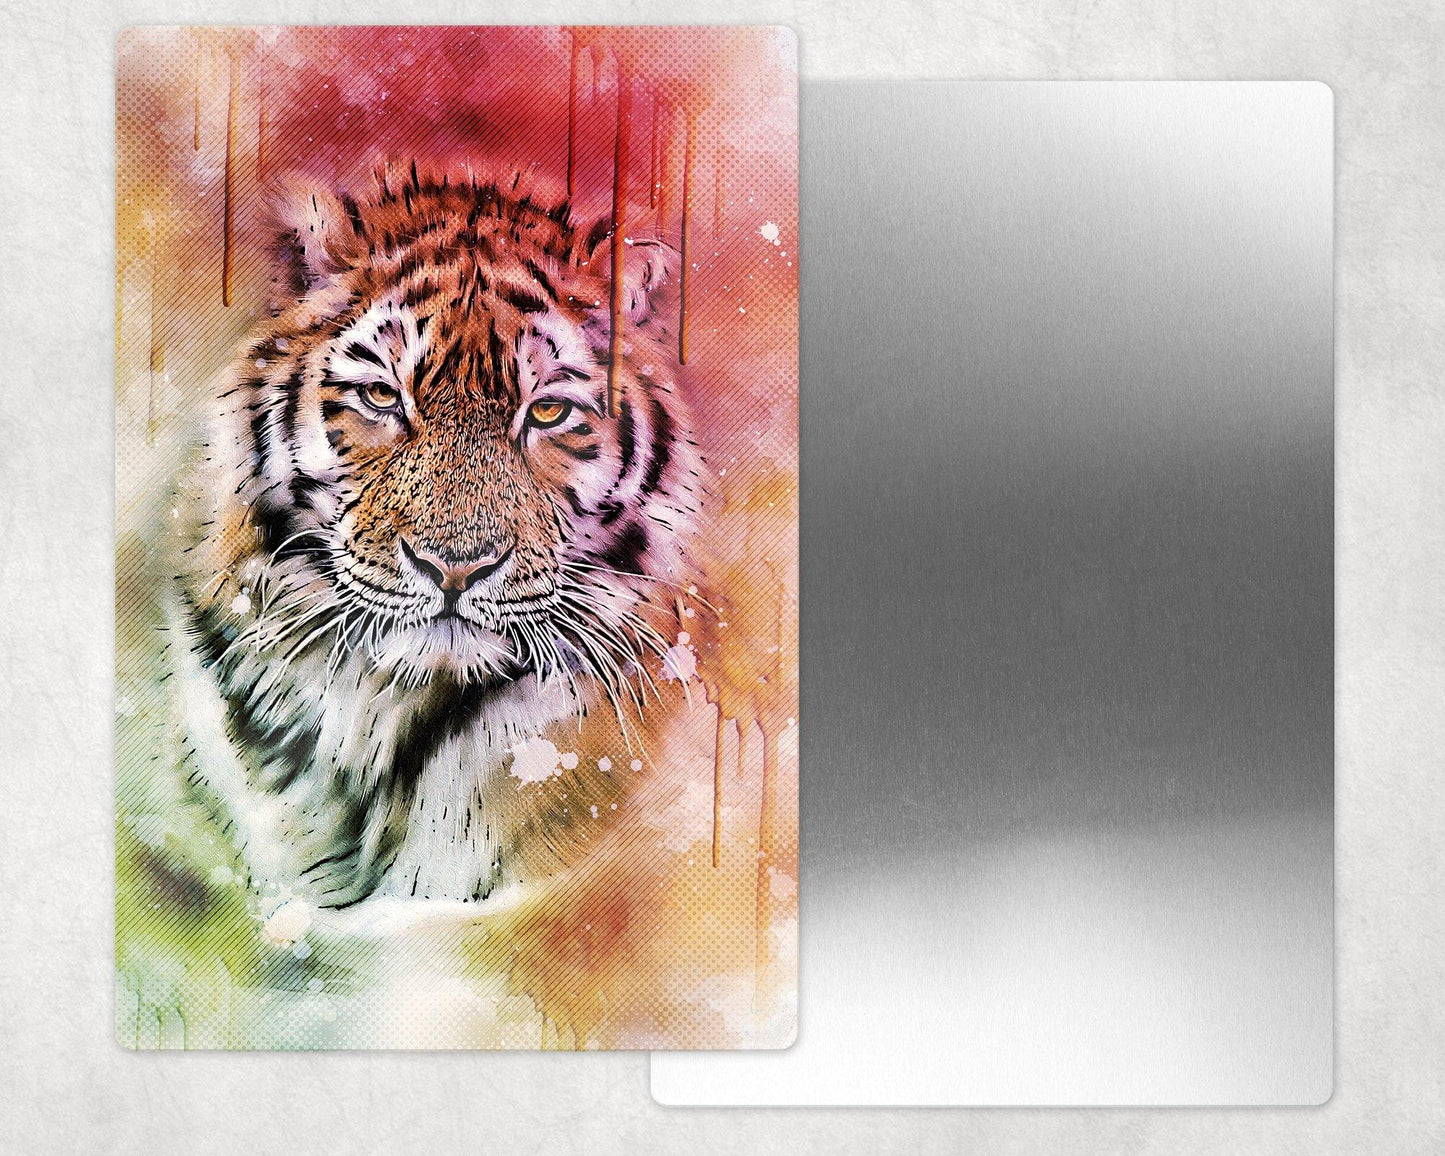 Tiger Portrait Metal Photo Panel - 8x12 or 12x18 - Schoppix Gifts